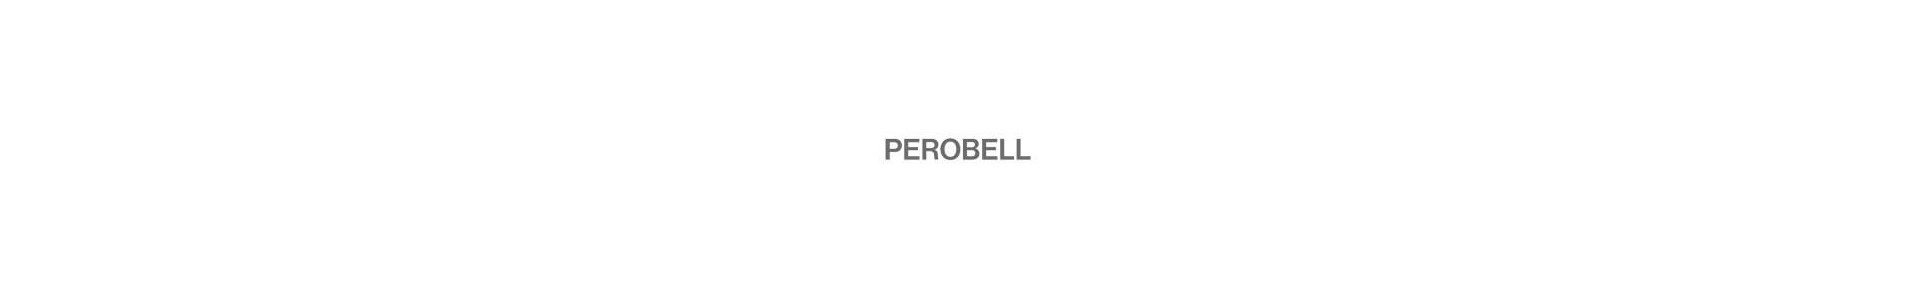 Perobell